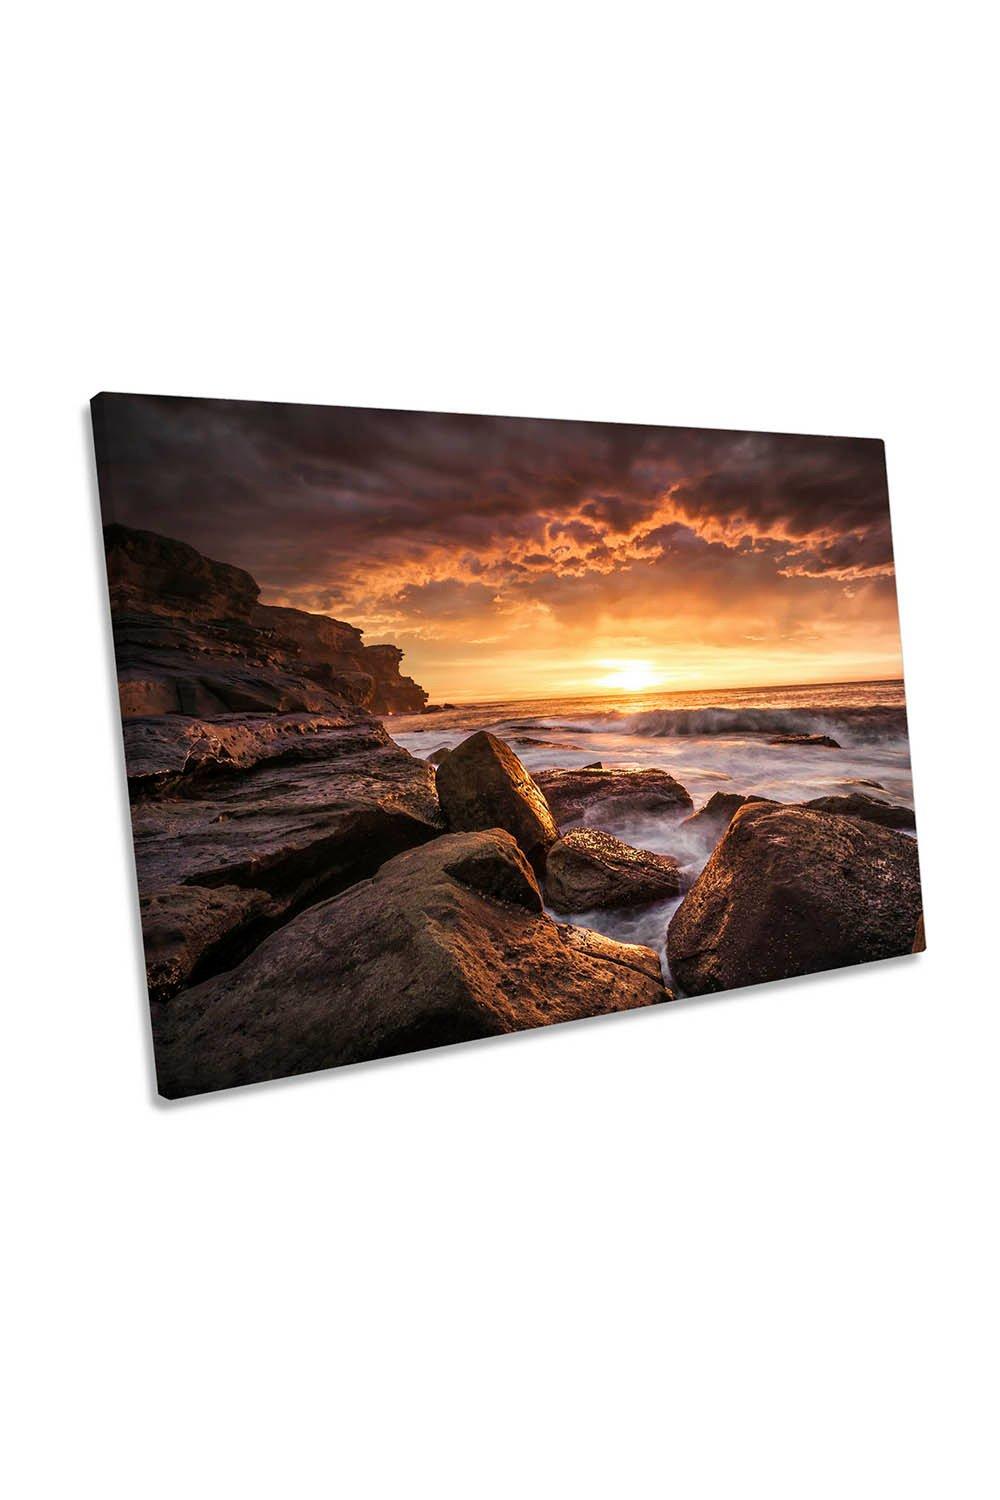 Cape Solander Australia Sunset Beach Canvas Wall Art Picture Print